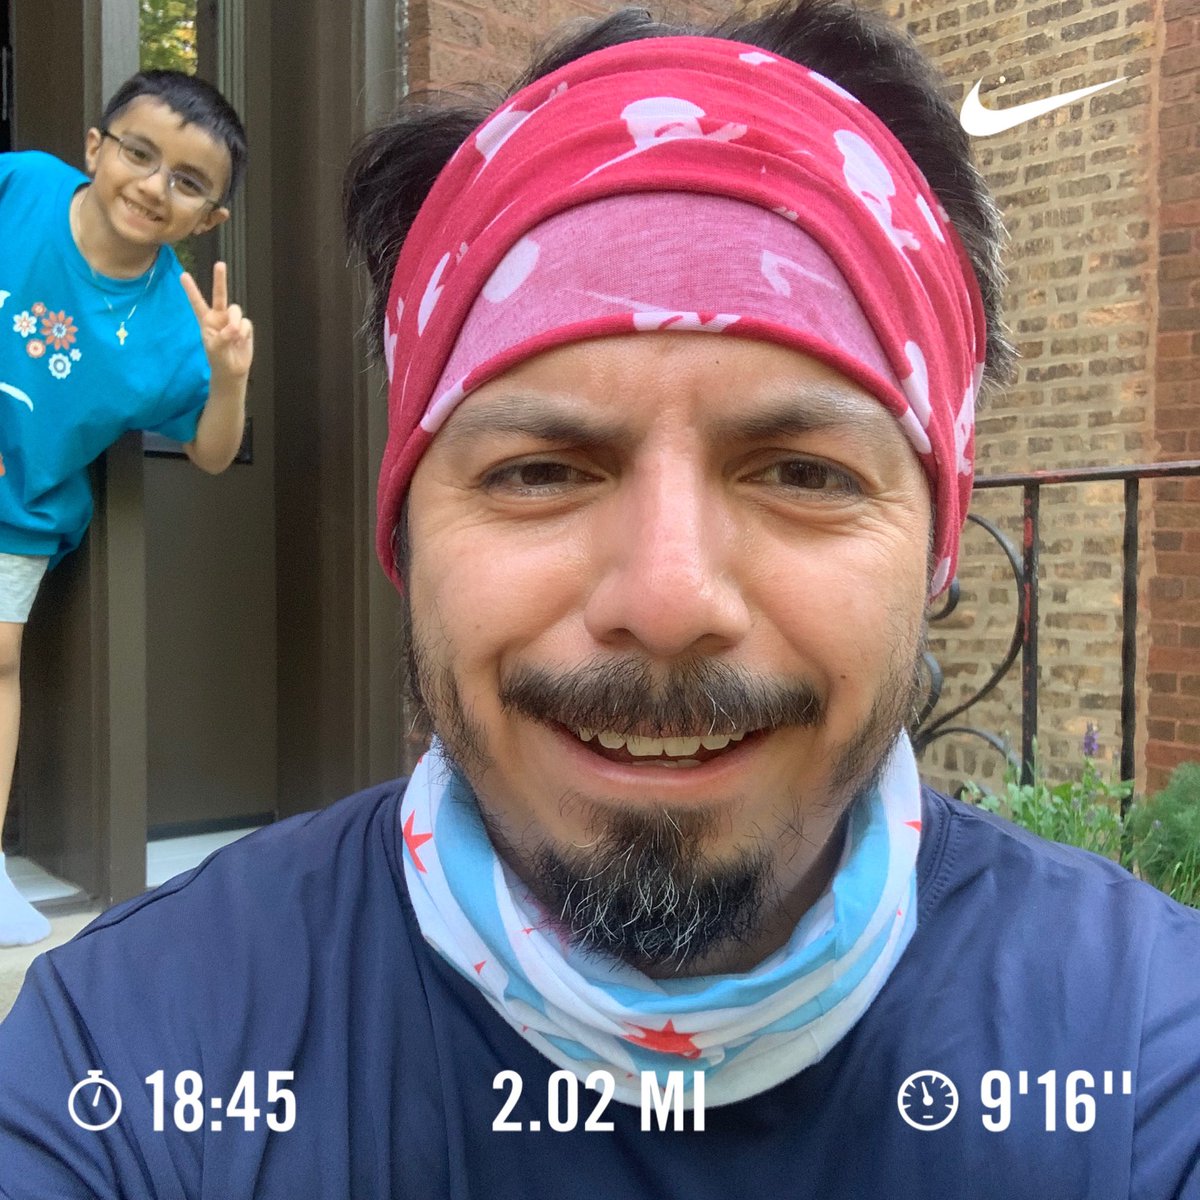 Ran a quick 2 mile run today for #GlobalRunningDay. Now to eat some dinner! #StJudeHero #ForStJude #DadsWhoRun #Dad2SummitRunningGroup